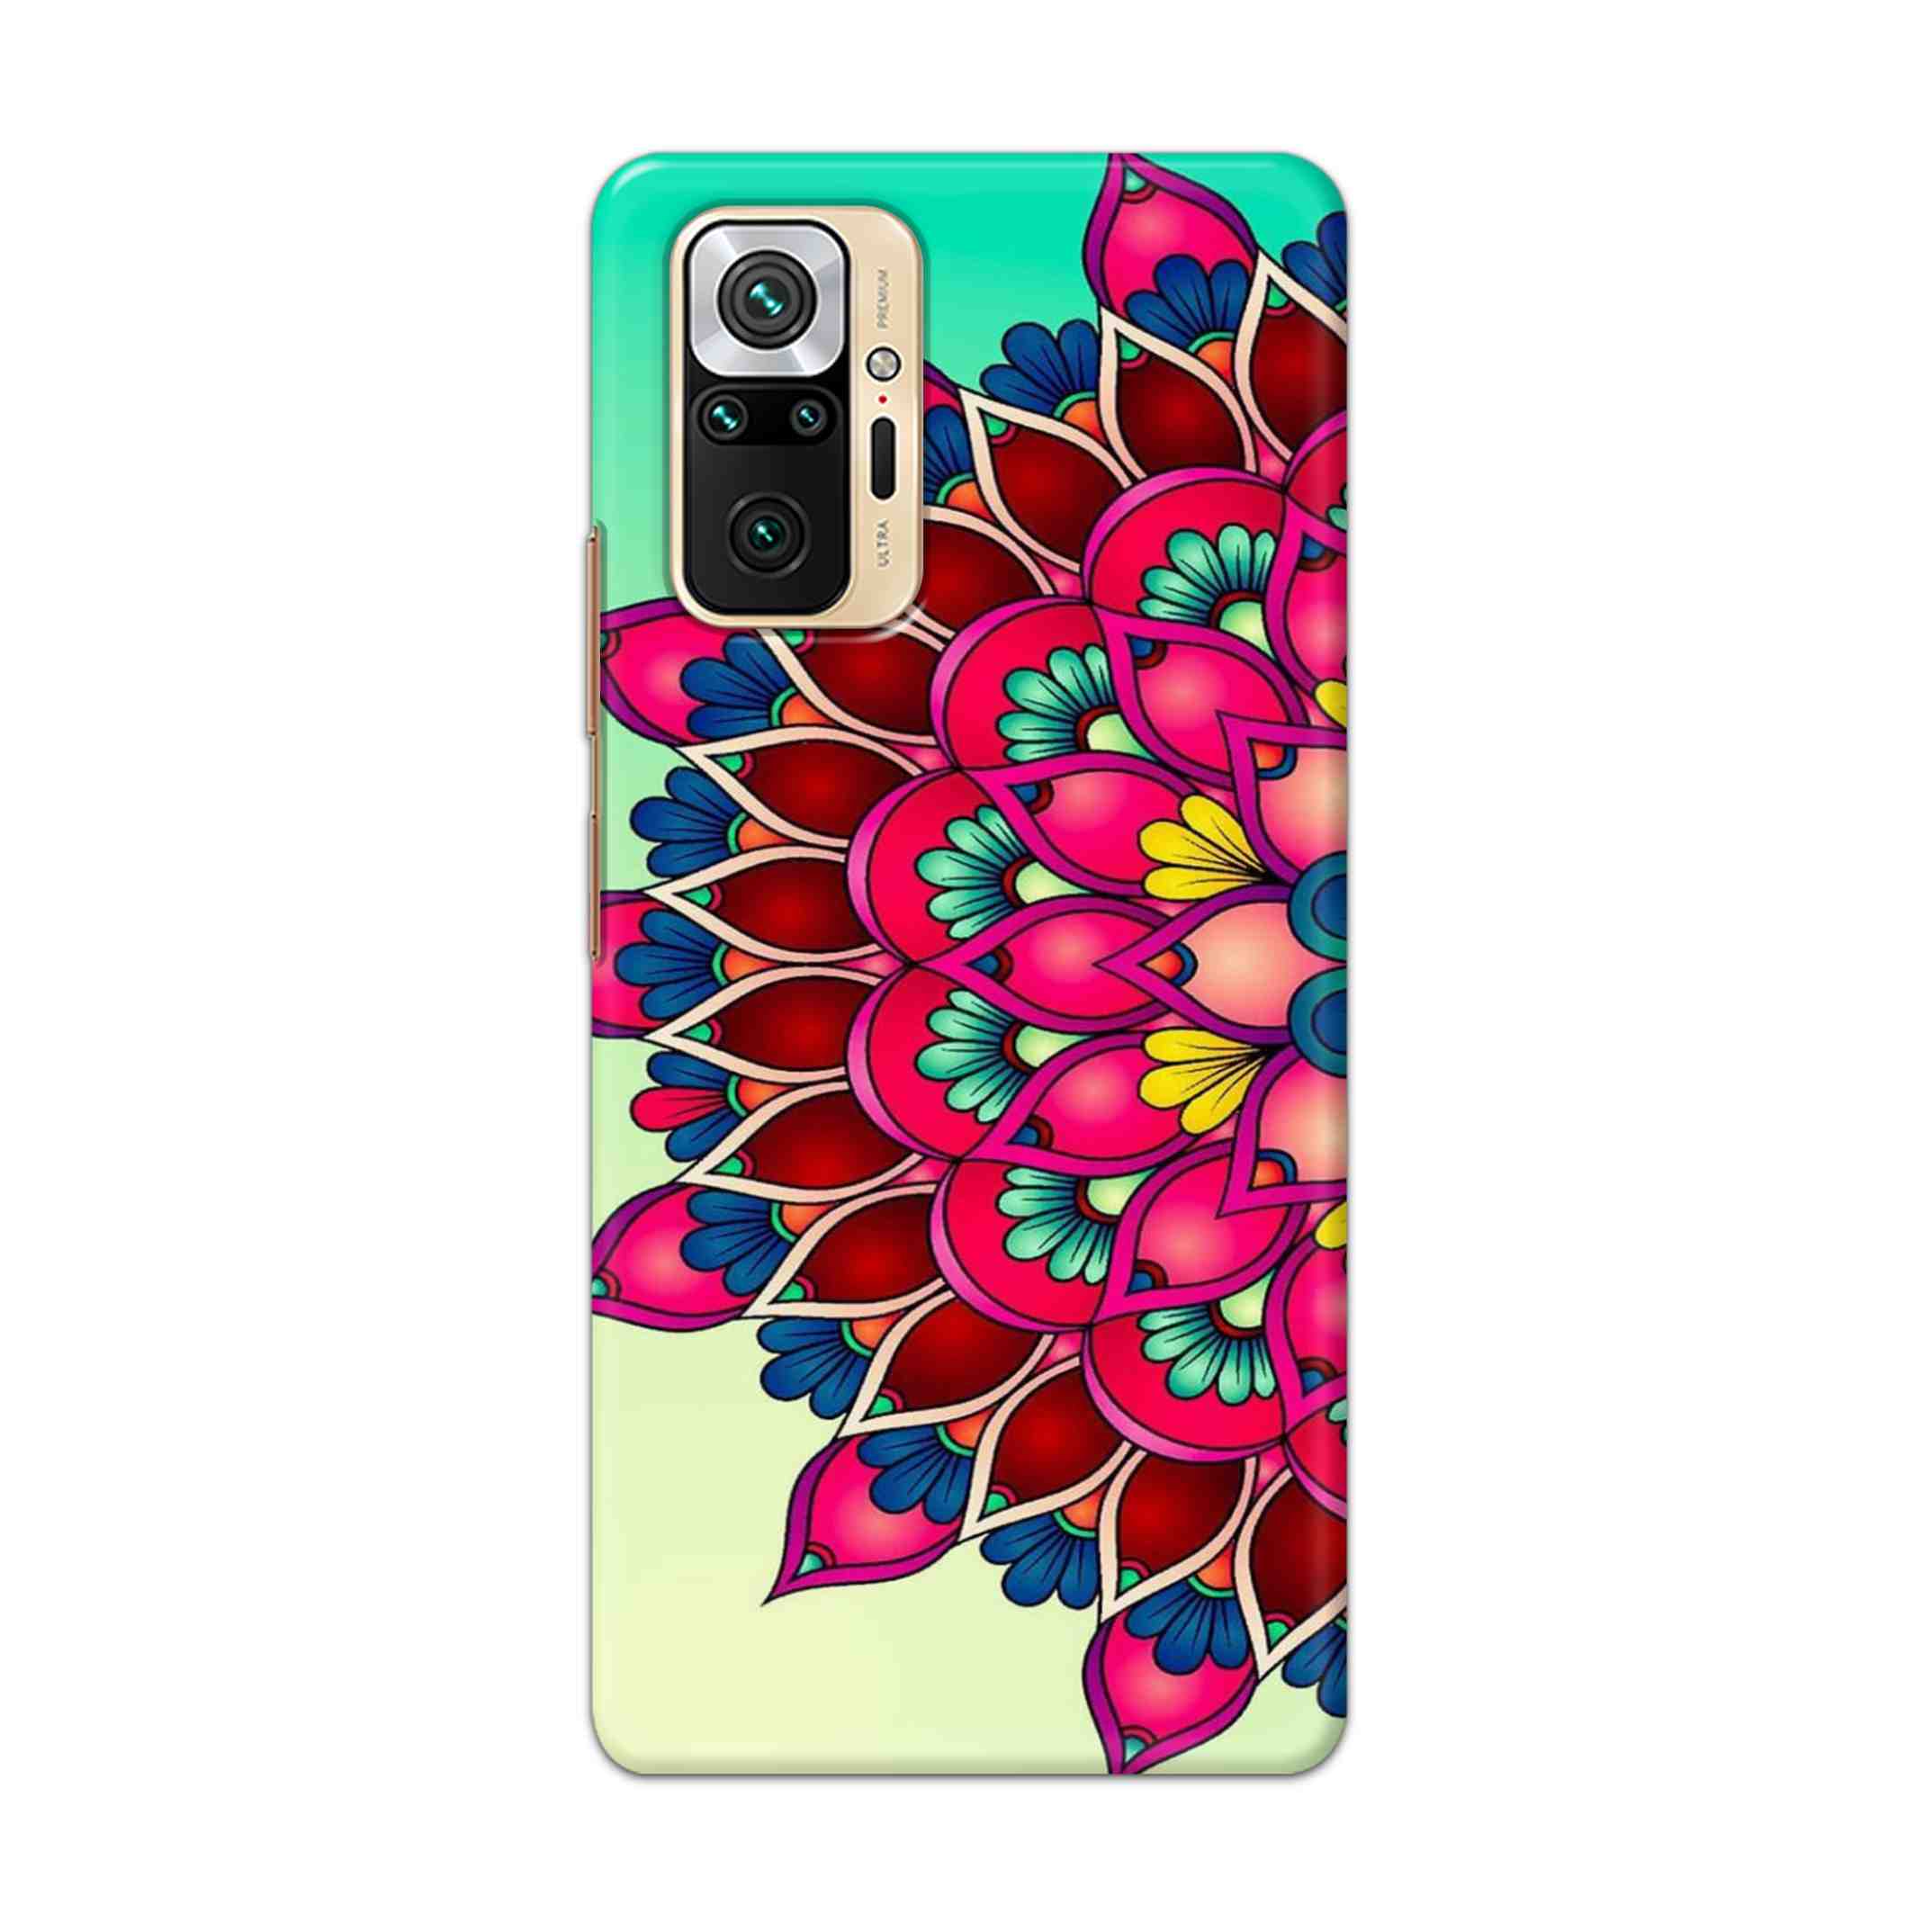 Buy Lotus Mandala Hard Back Mobile Phone Case Cover For Redmi Note 10 Pro Online